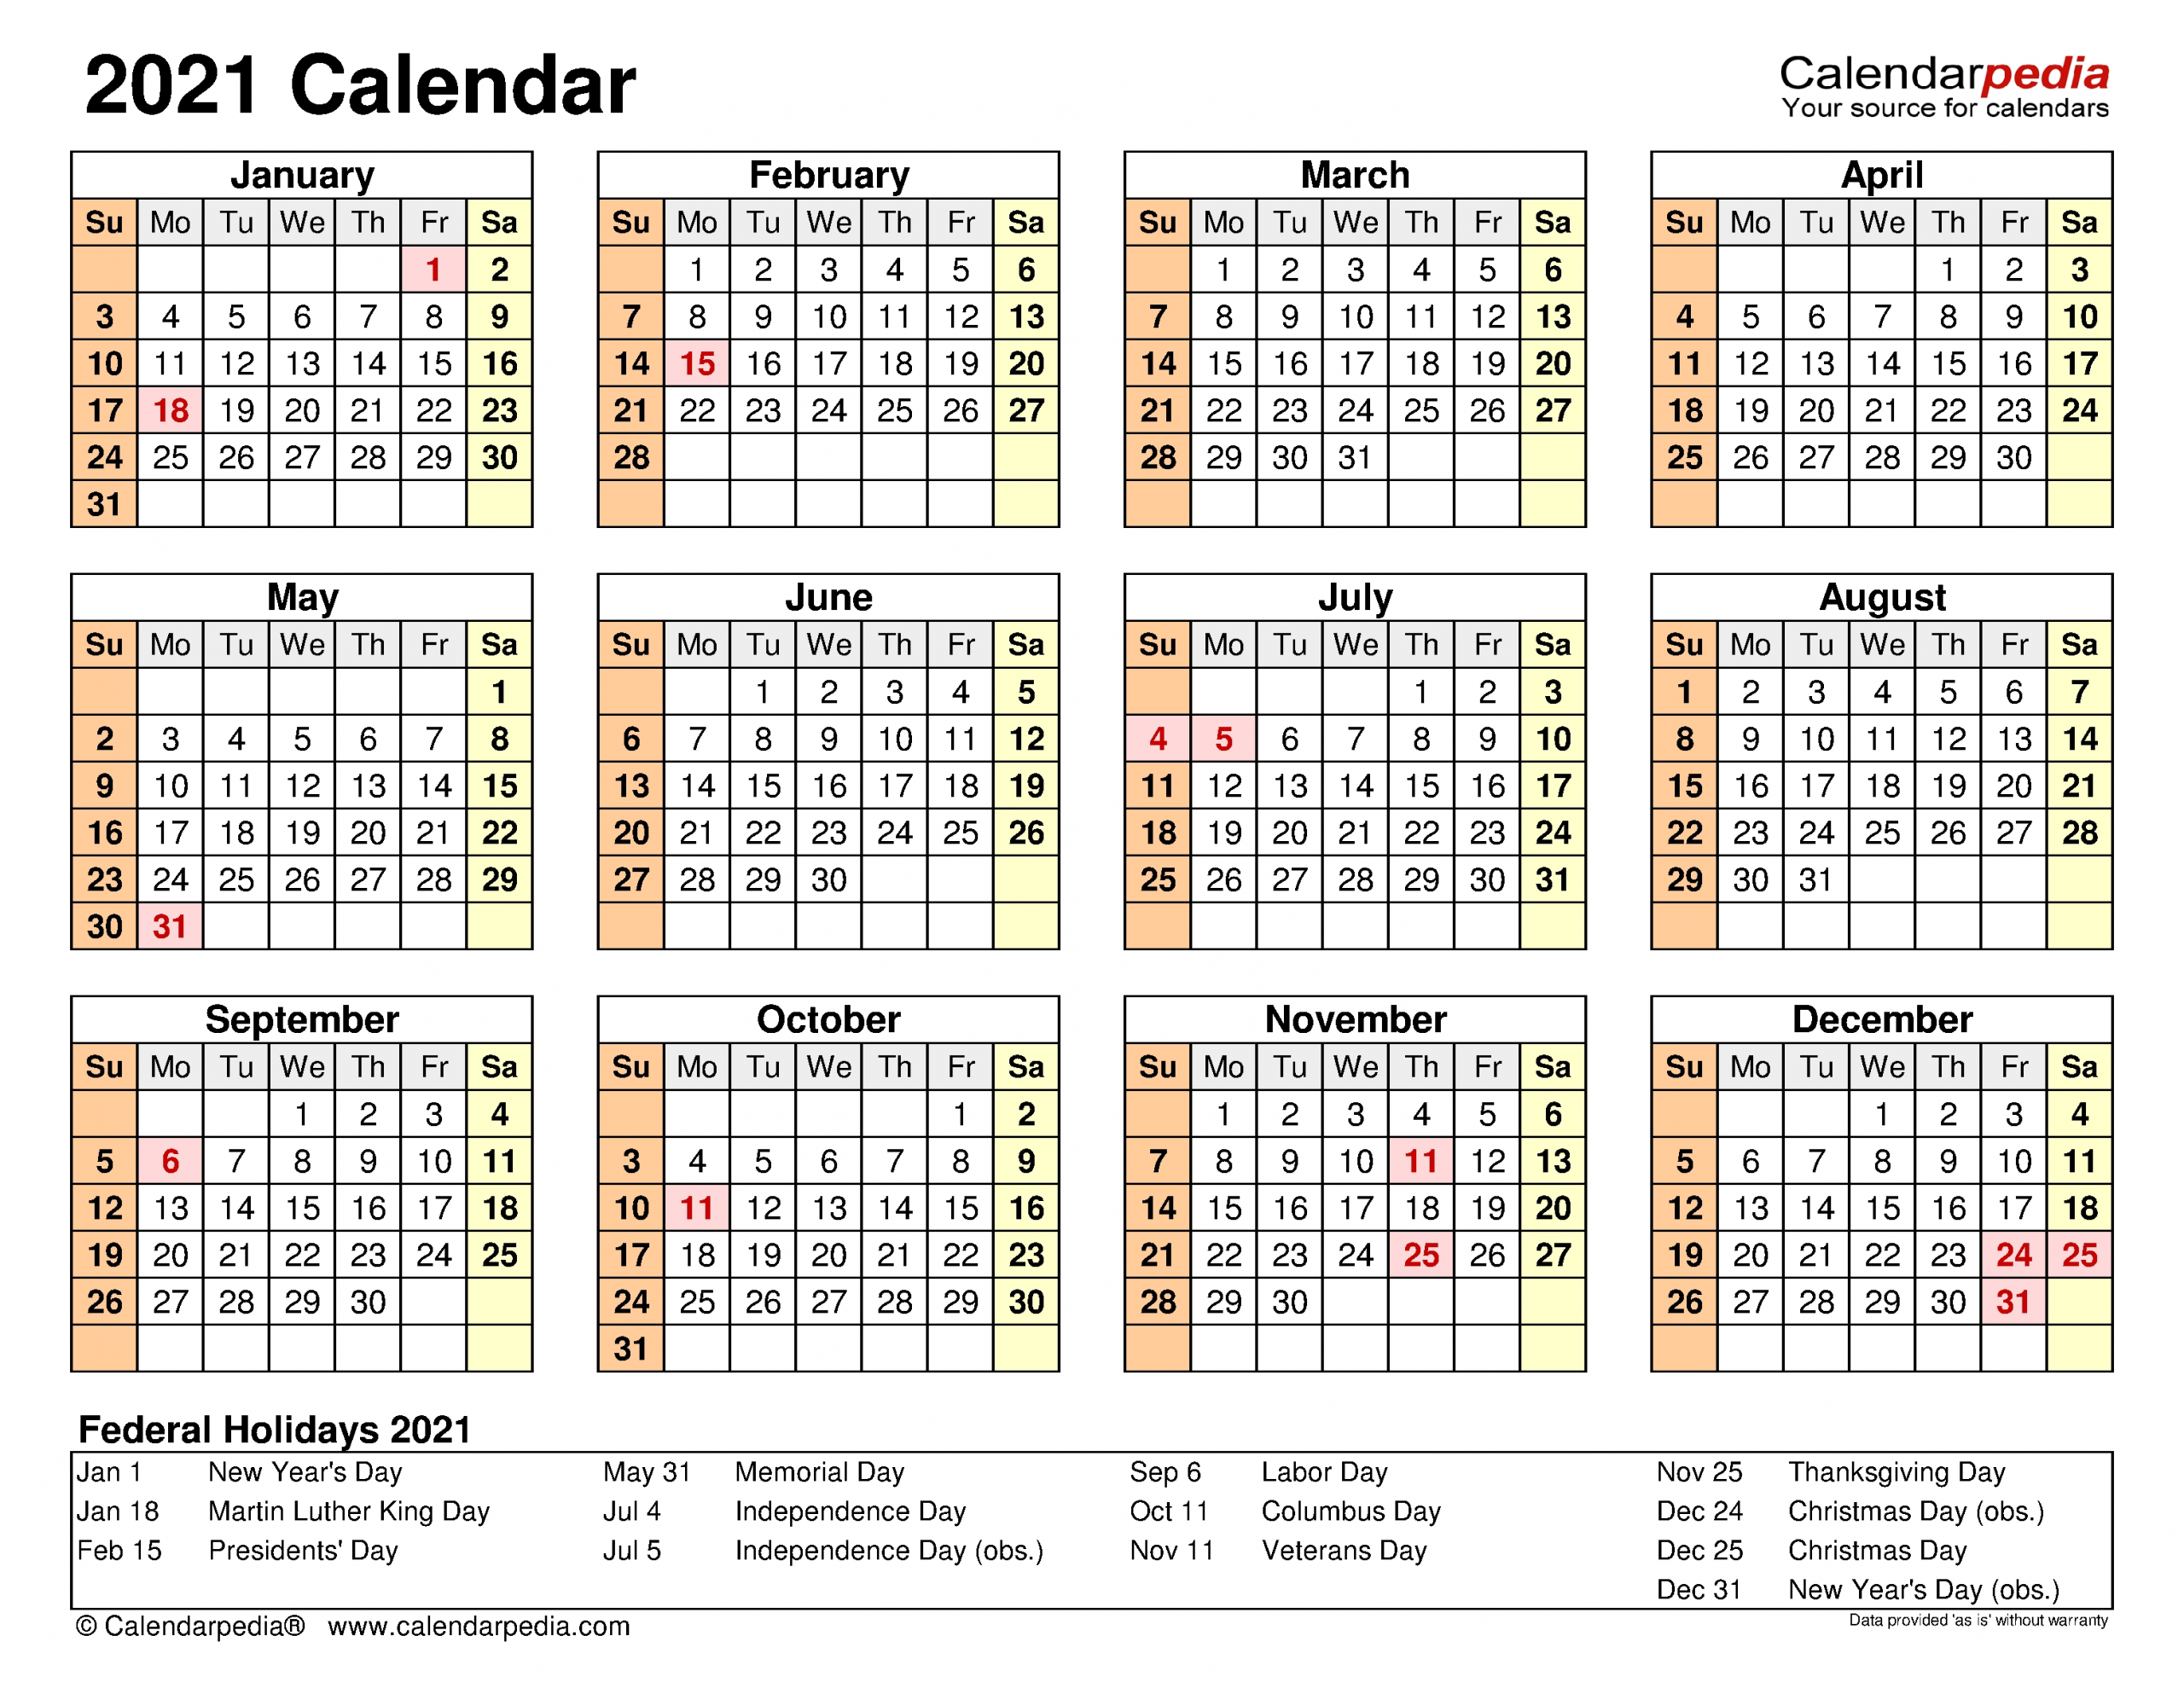 2021 Calendar - Free Printable Word Templates - Calendarpedia-Calendar 2021 Template Free Word